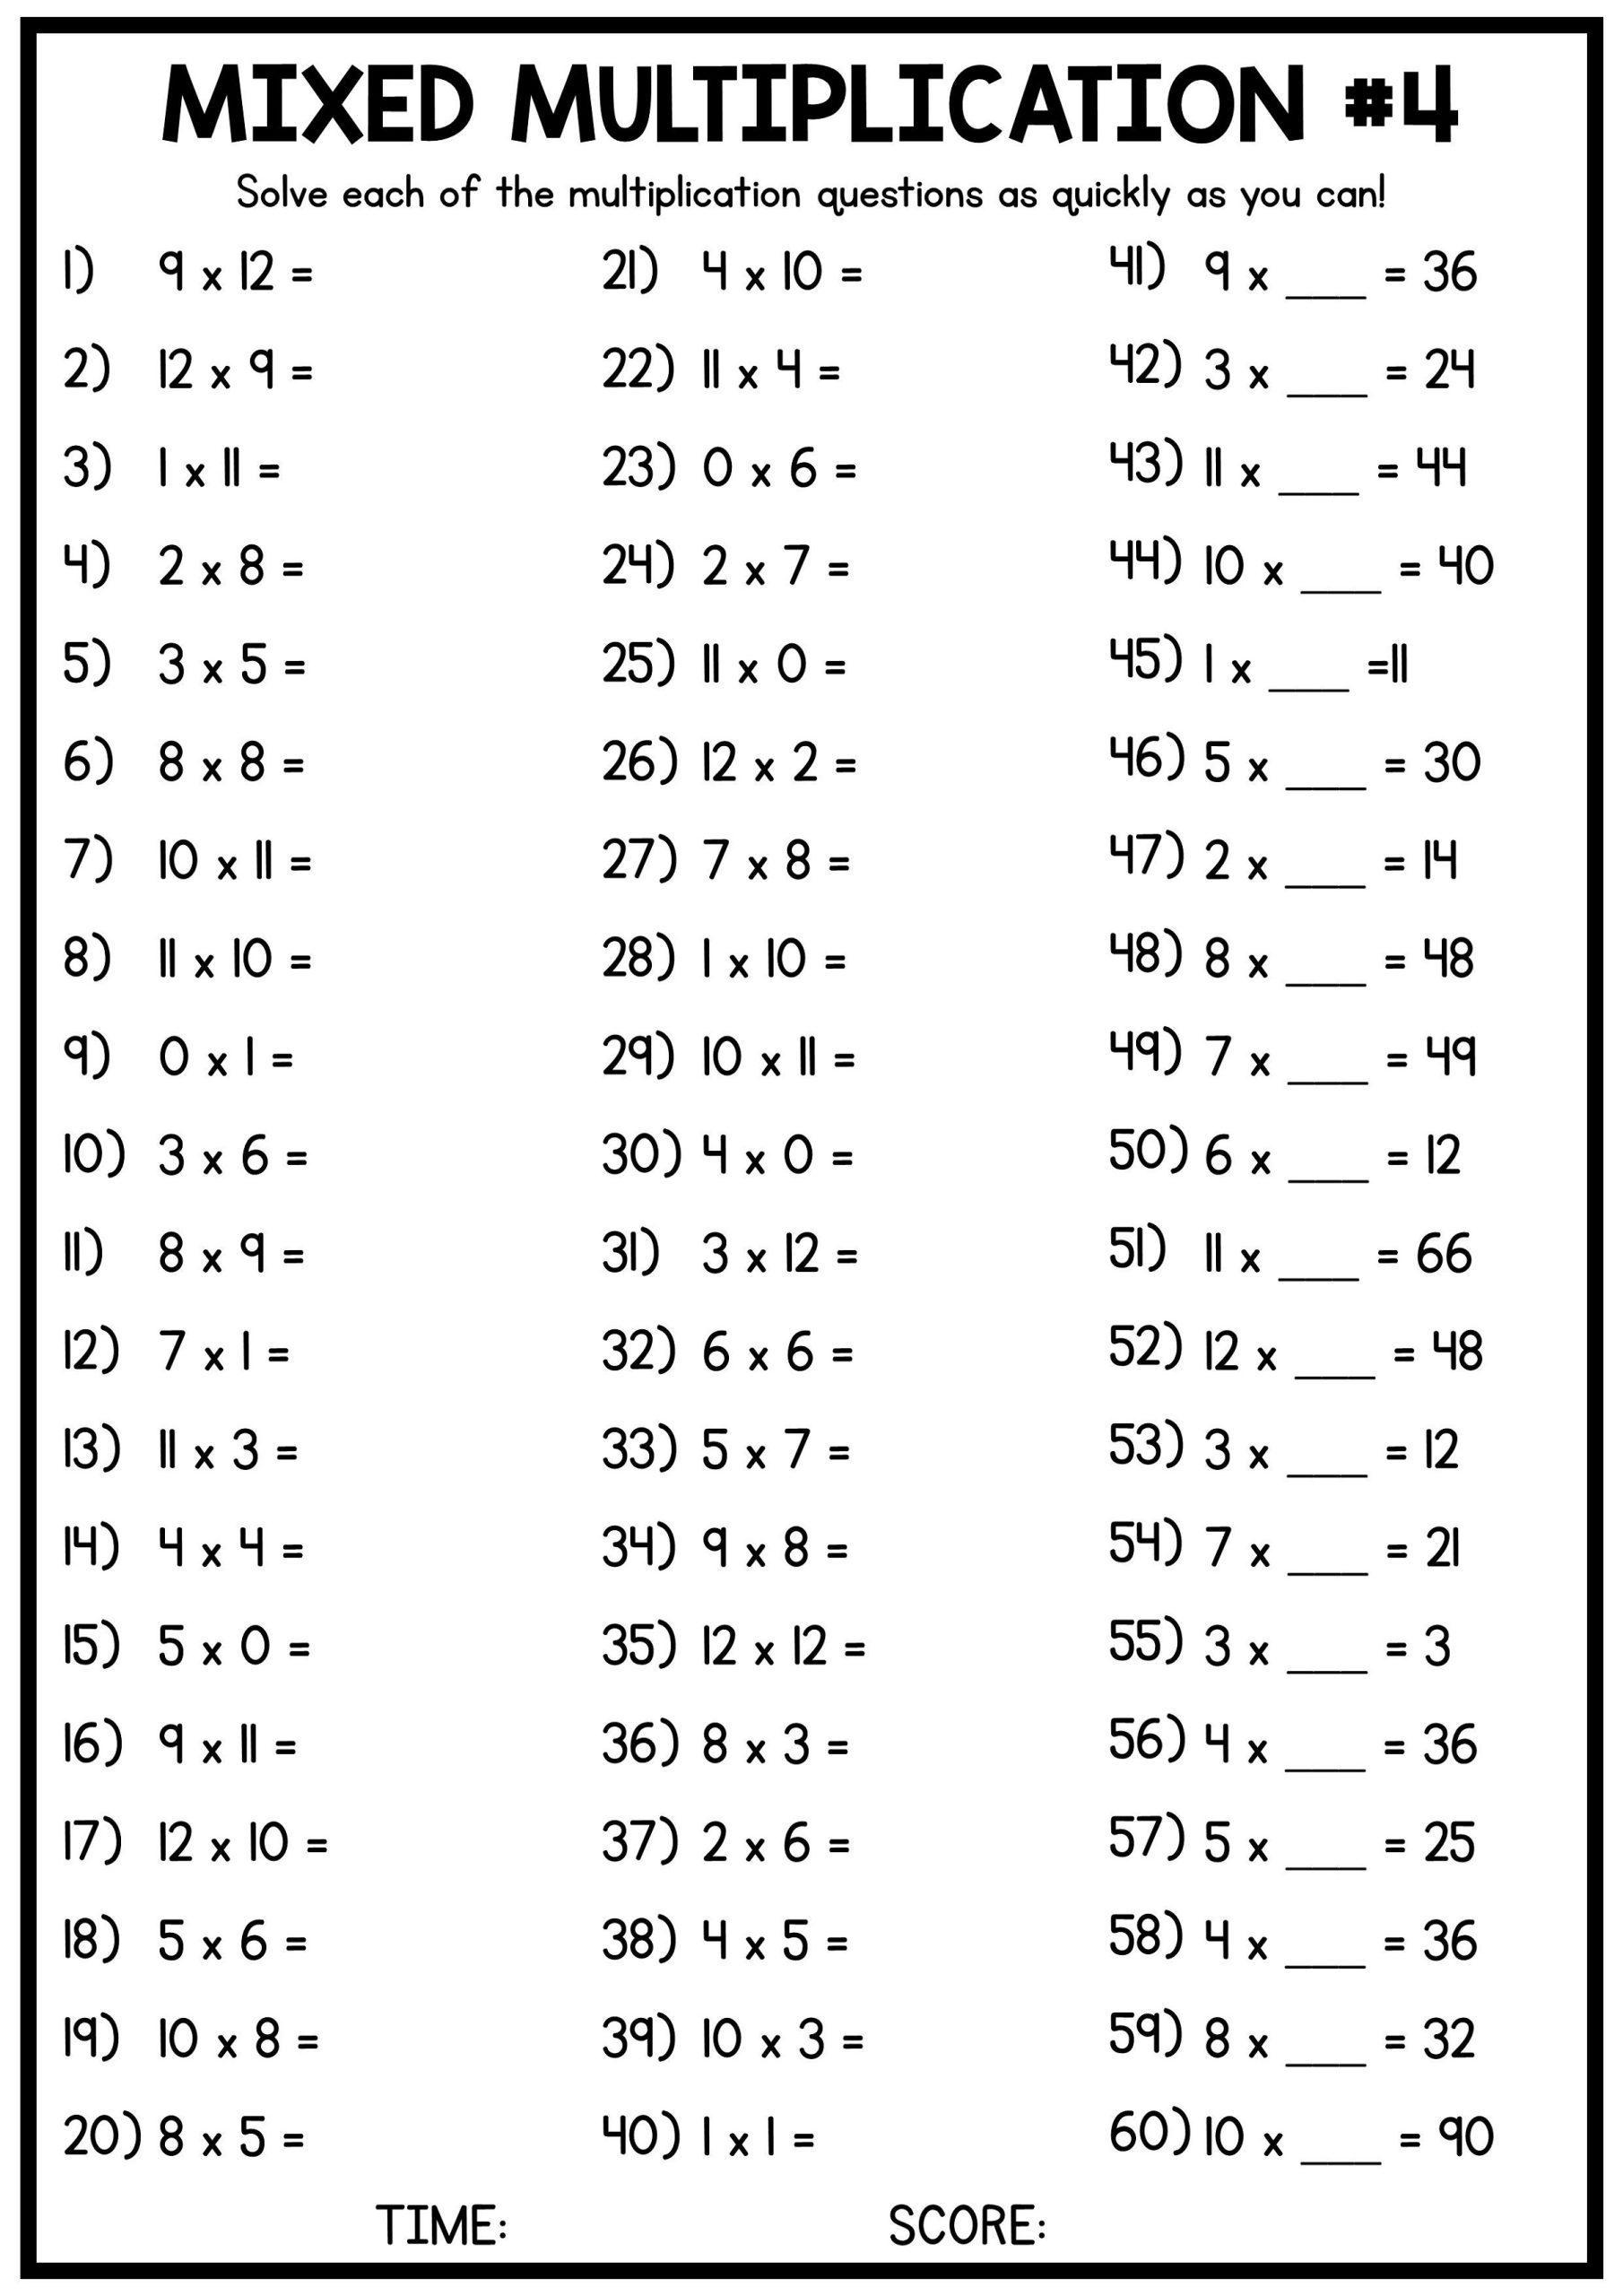 Multiplication Table Worksheet Mixed